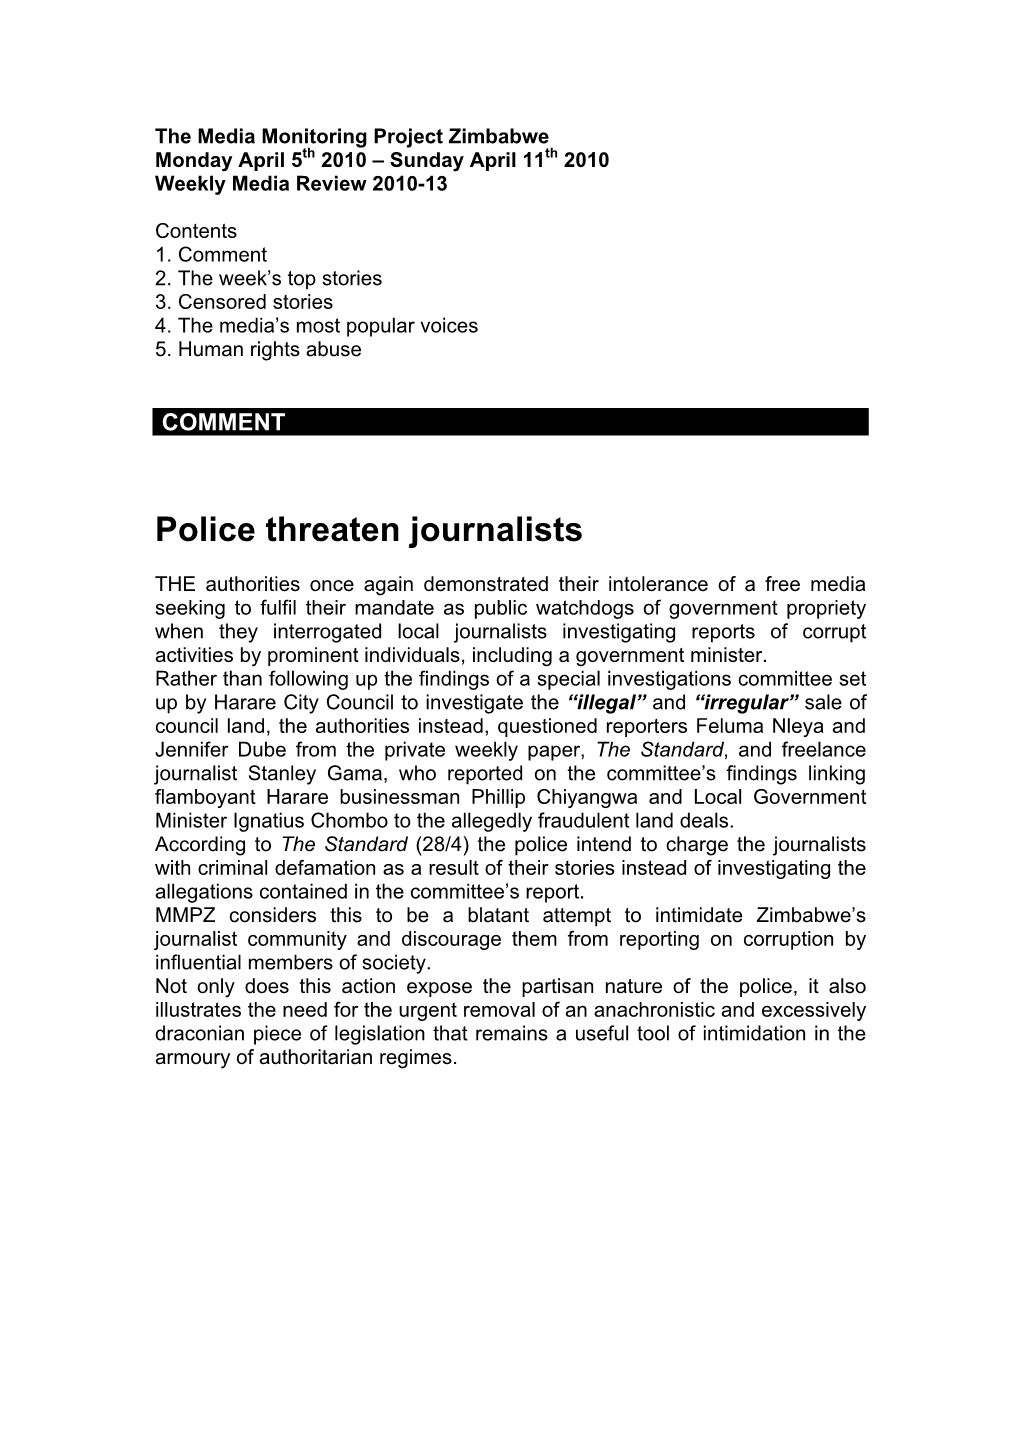 Police Threaten Journalists